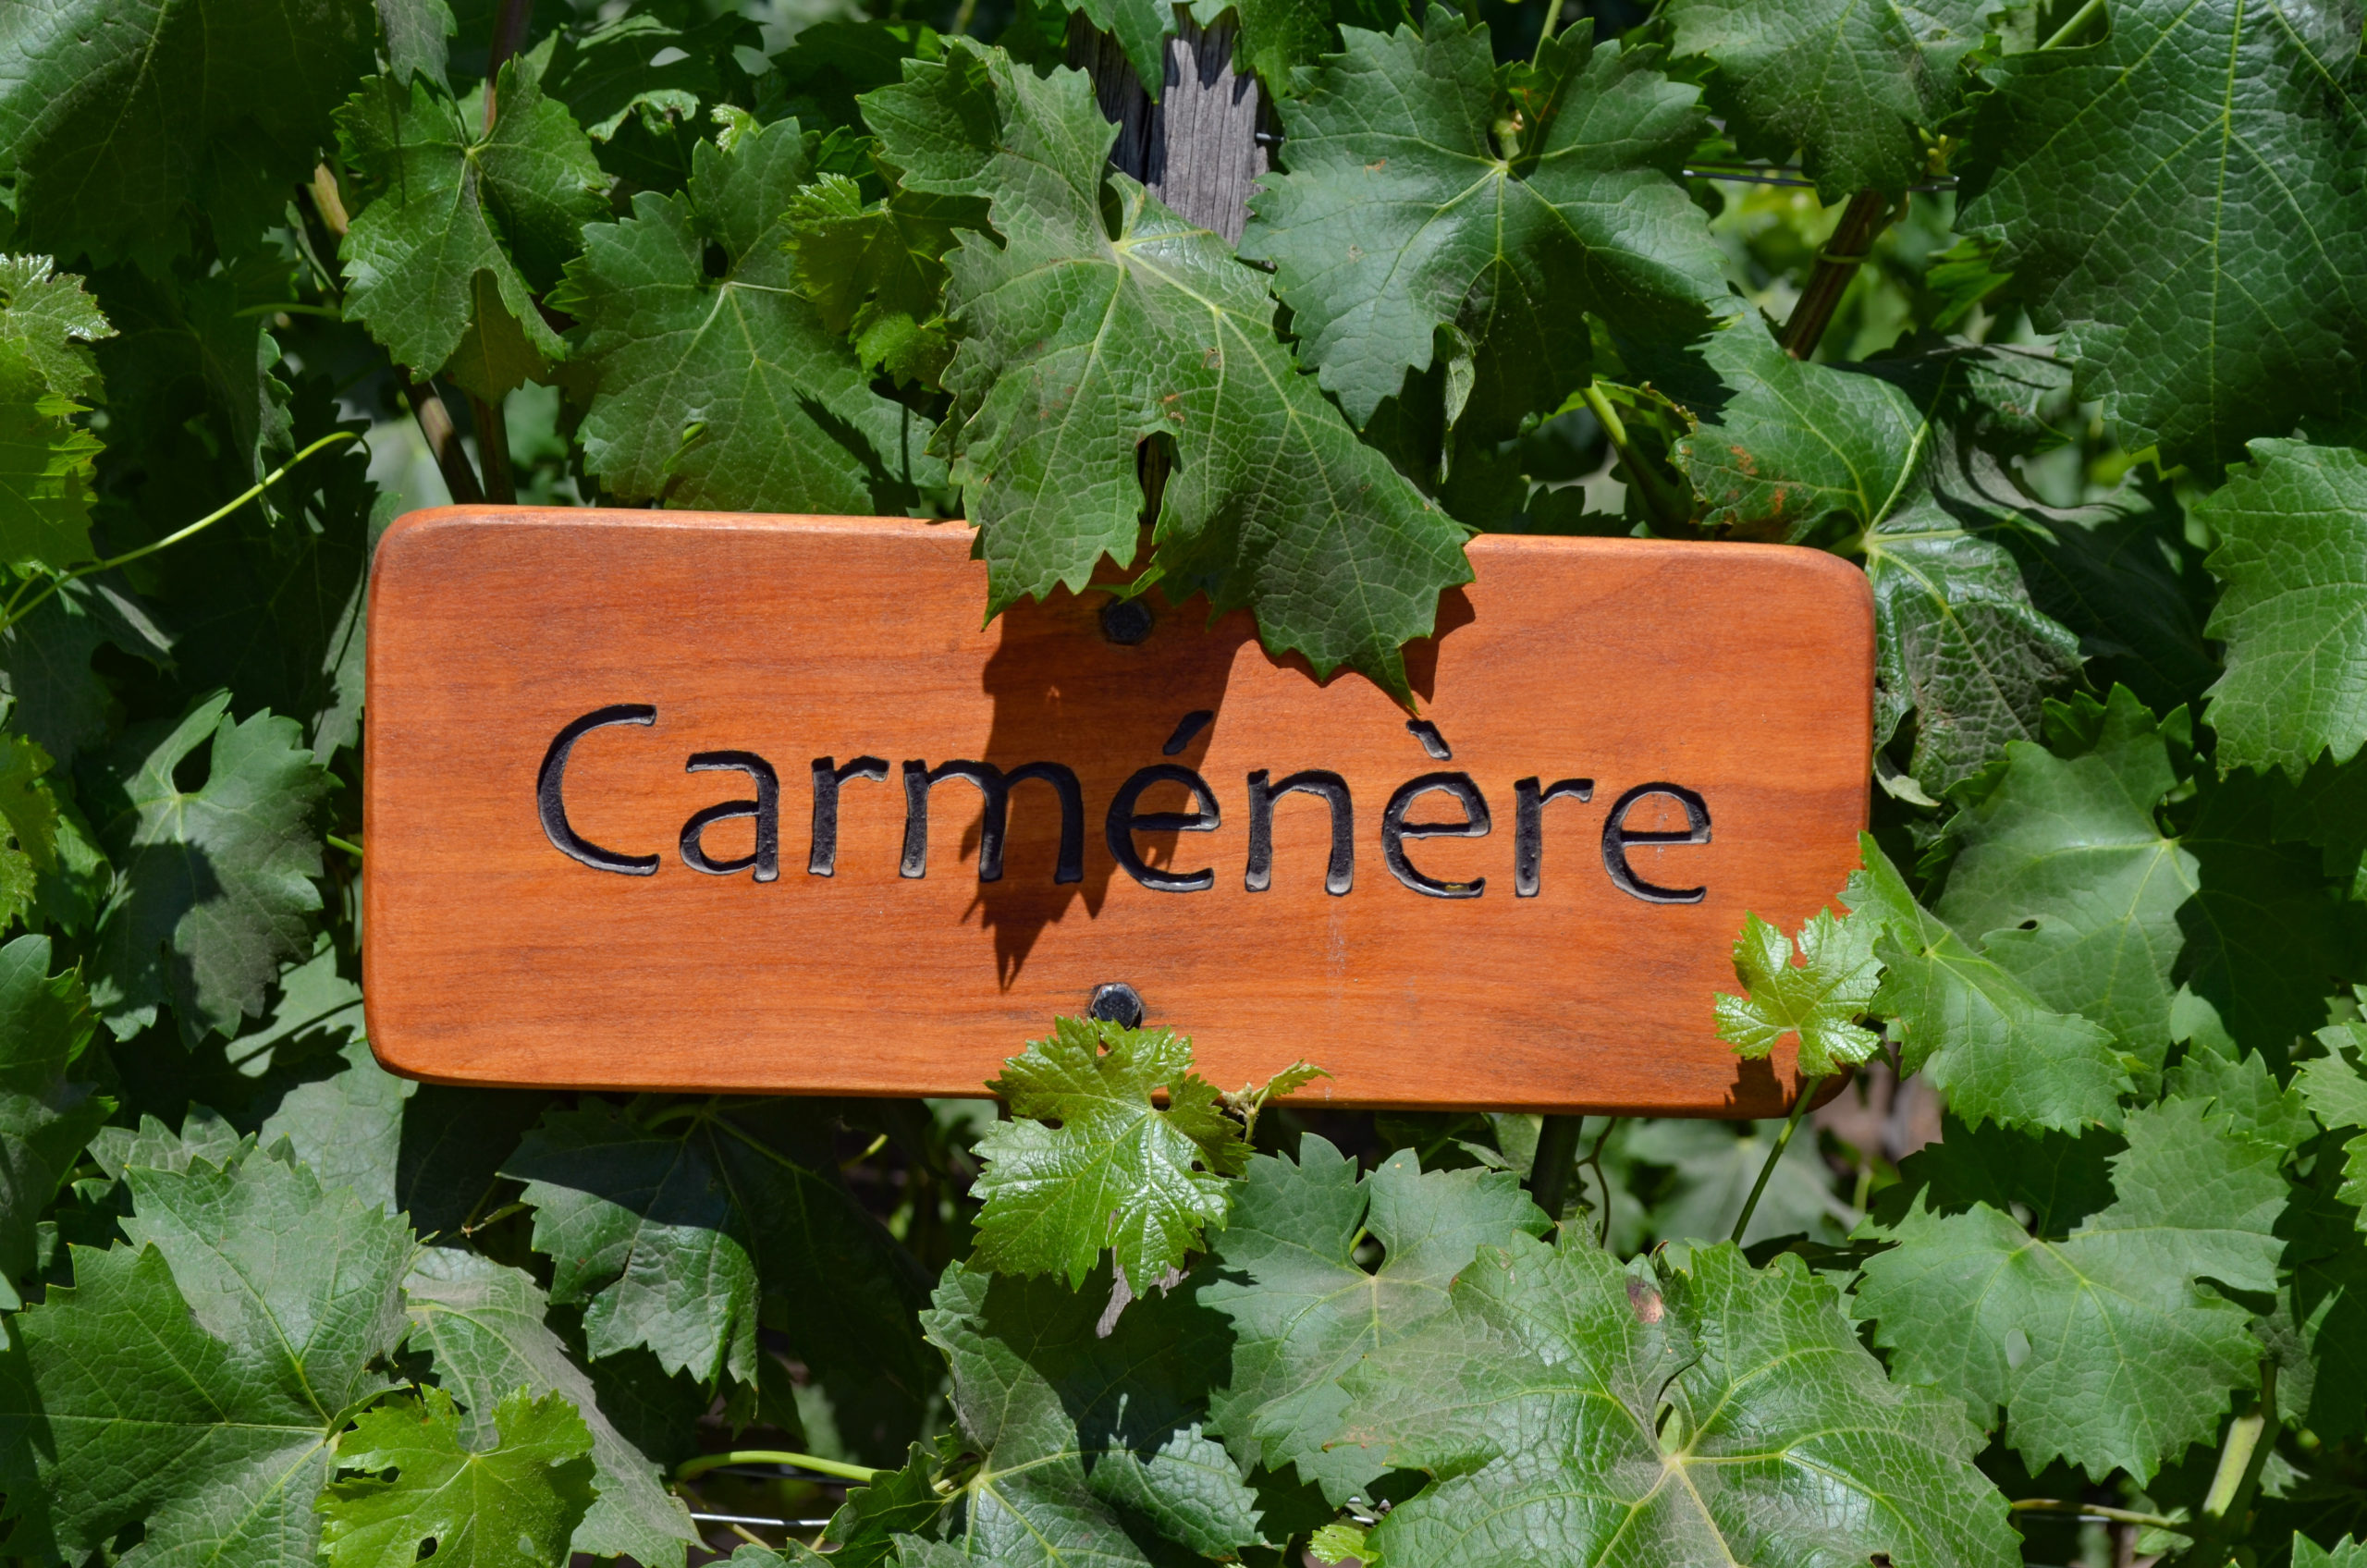 Vineyard sign reading Carmenere to mark the varietal on this vineyard row